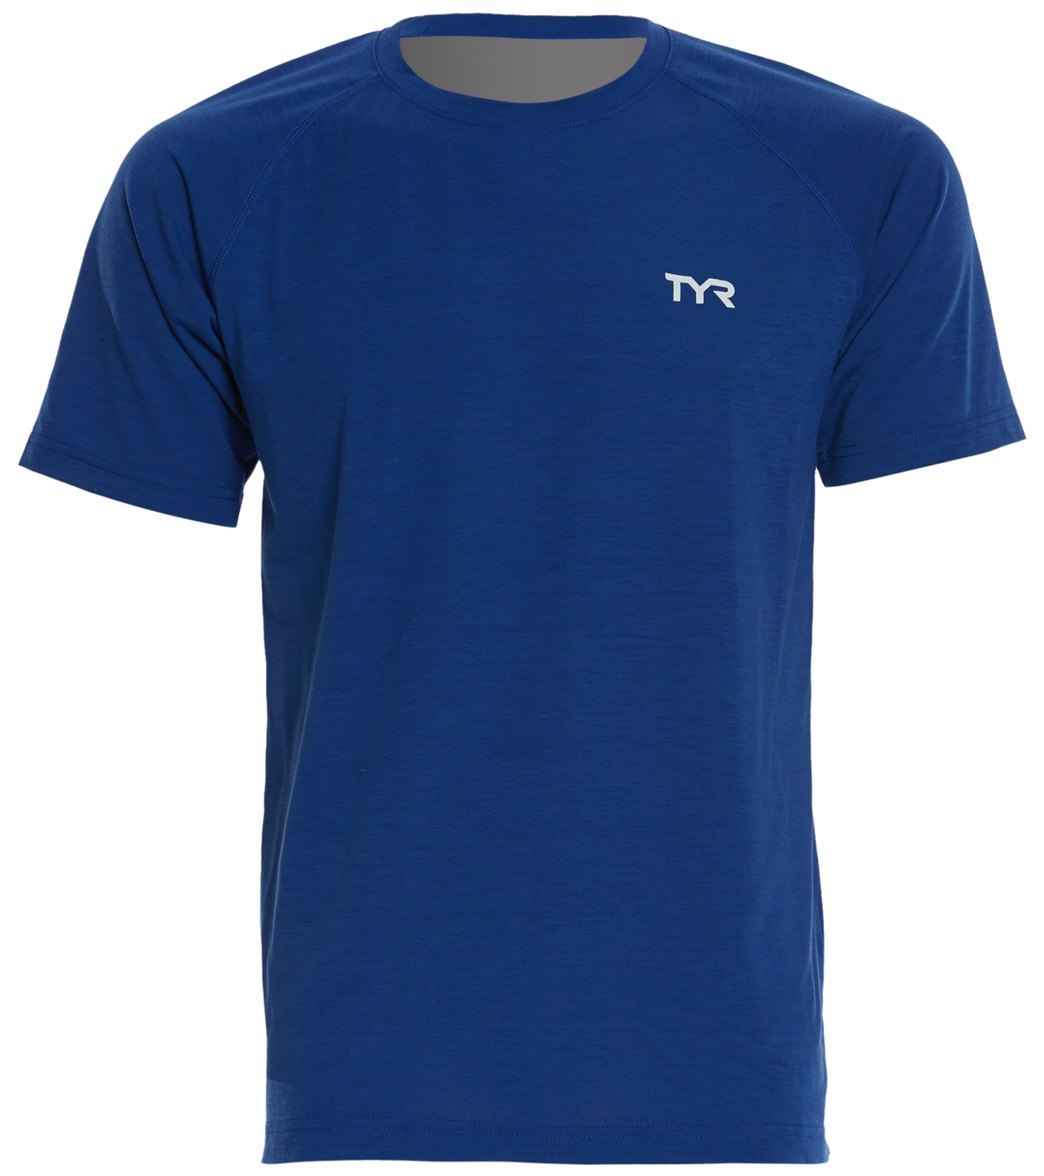 TYR Men's Alliance Tech Tee Shirt - Royal Medium Polyester/Spandex - Swimoutlet.com